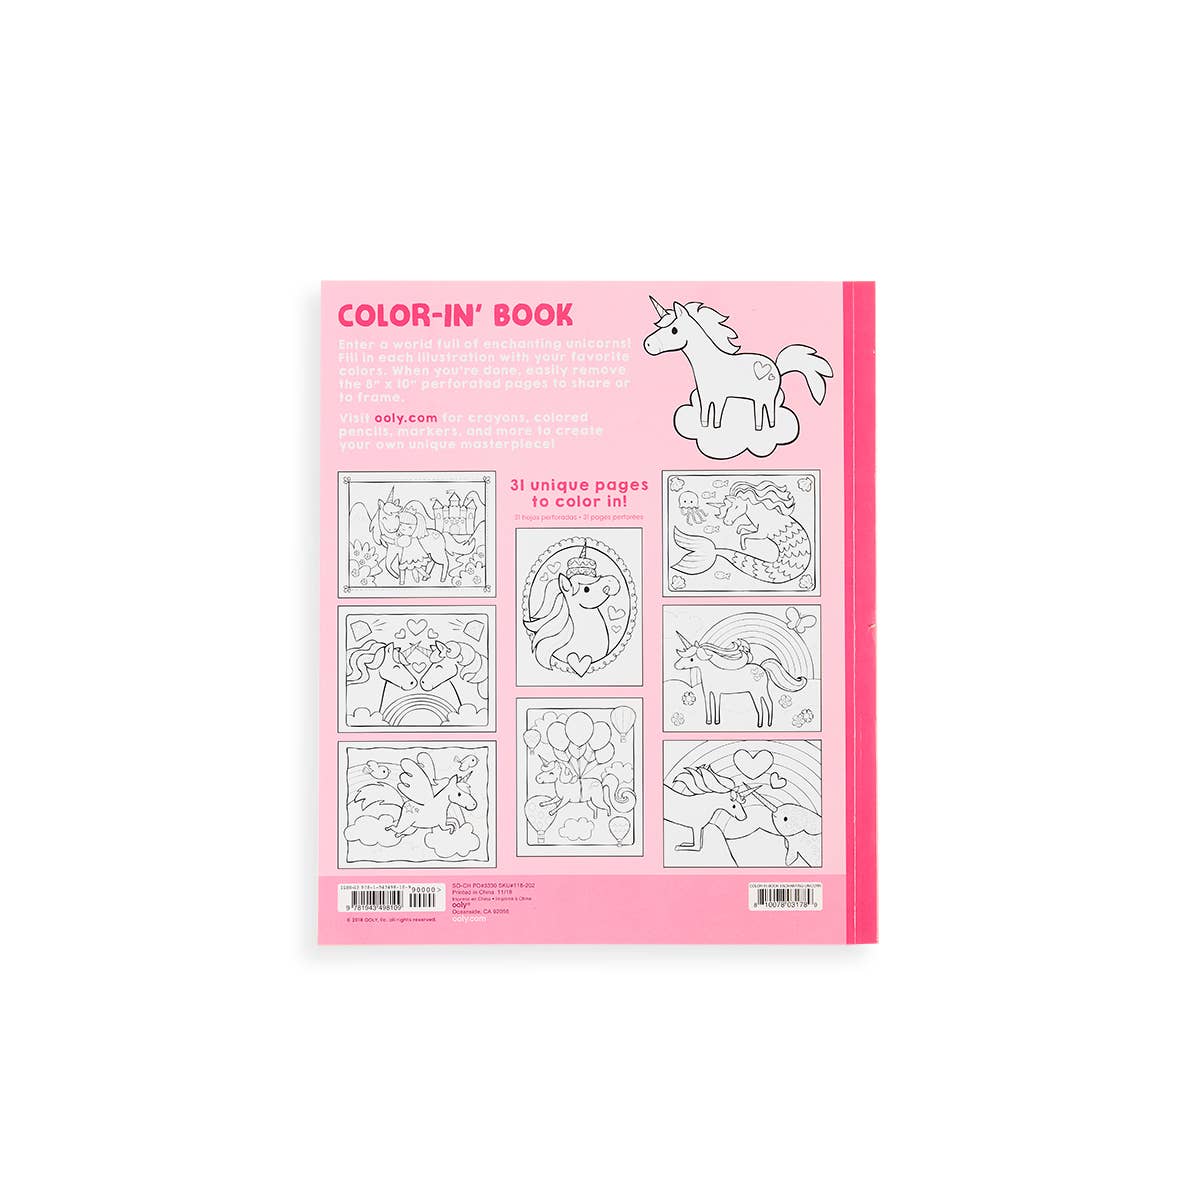 Unicorn dot marker coloring book: Fun Way to Introduce unicorn to